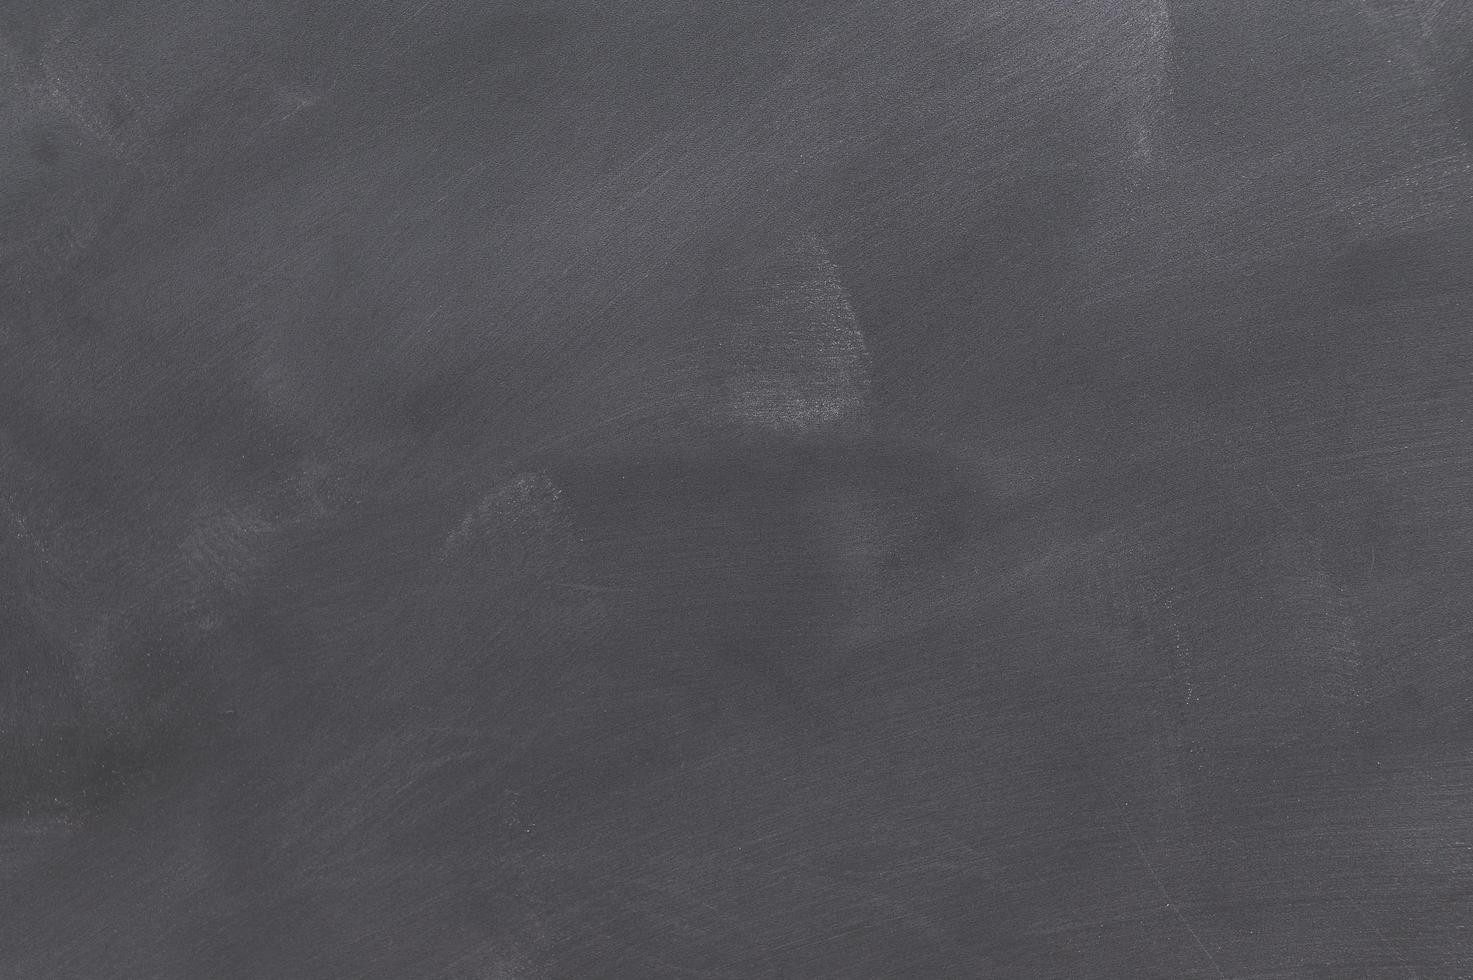 krijt stof gekleurd schoolbord achtergrond foto